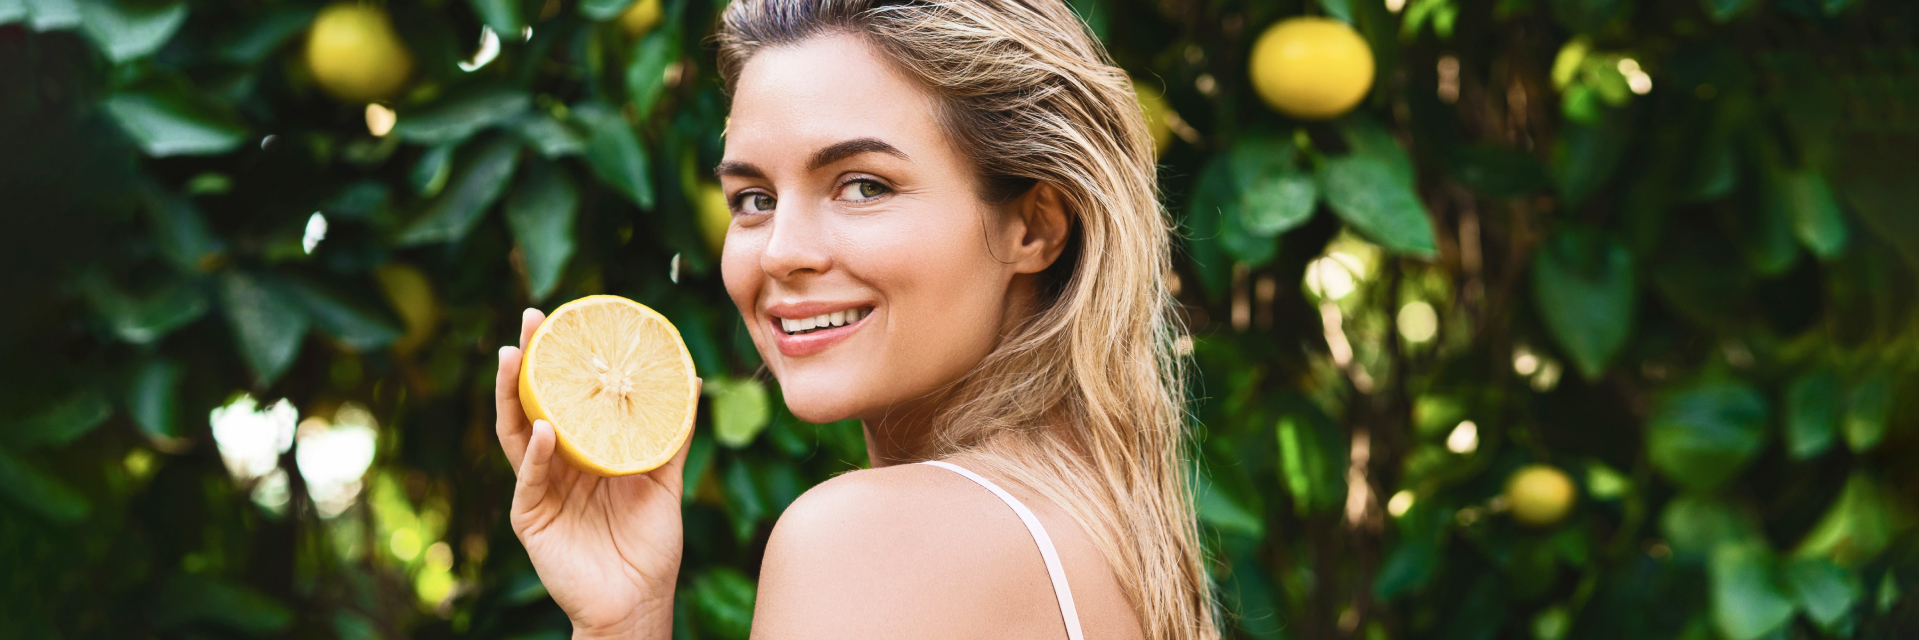 A photo of a woman with a lemon.